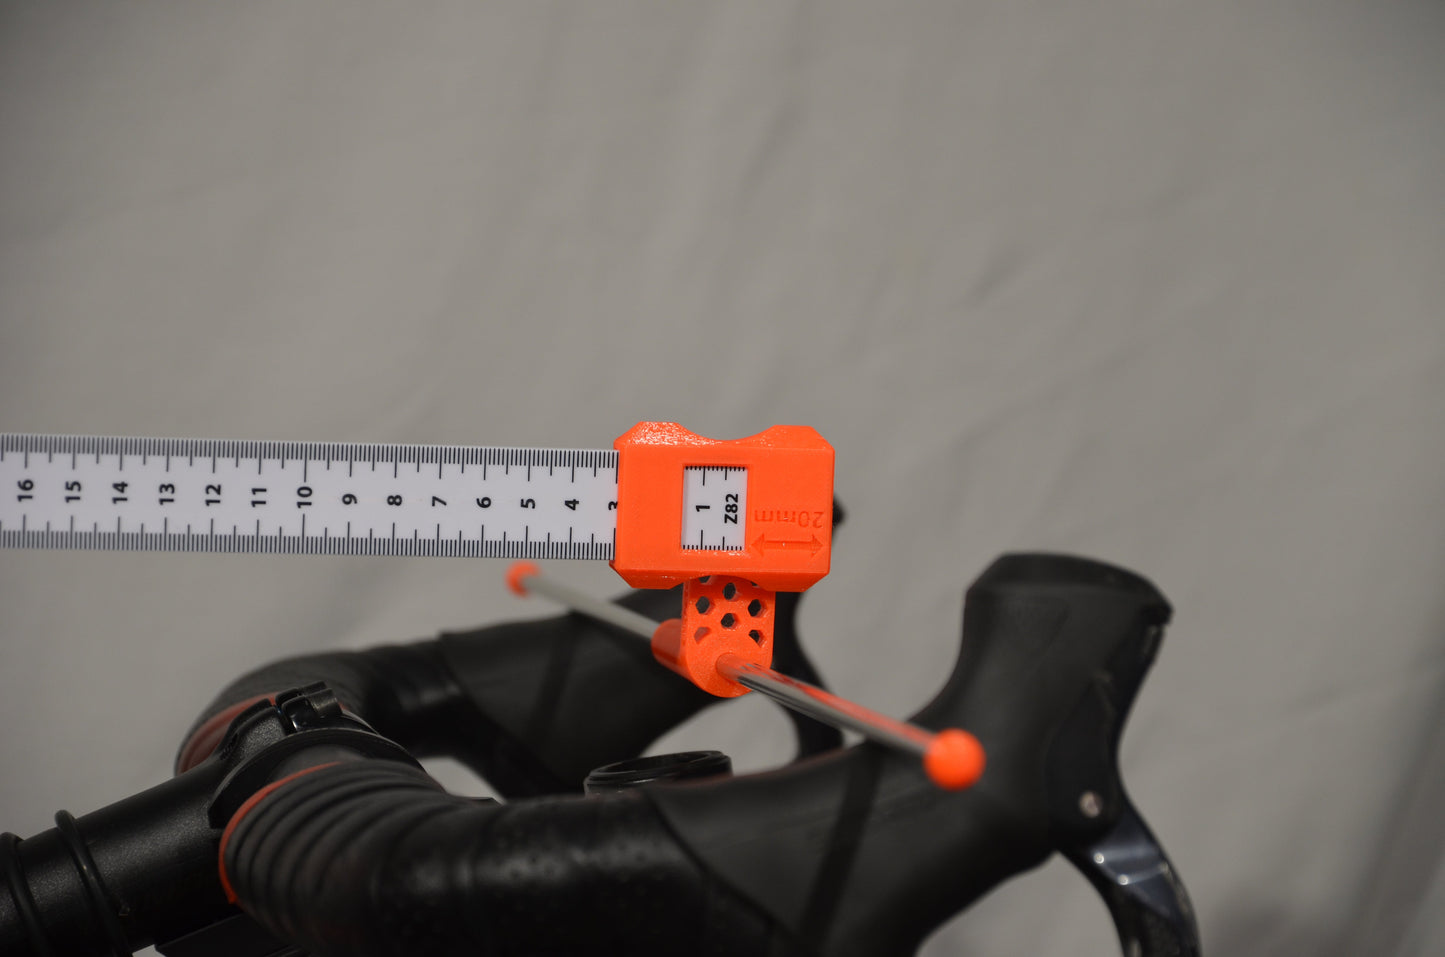 V4/5 to V6 UPGRADE KIT for Bike setup and measurement tool (NOT for Pro tool)